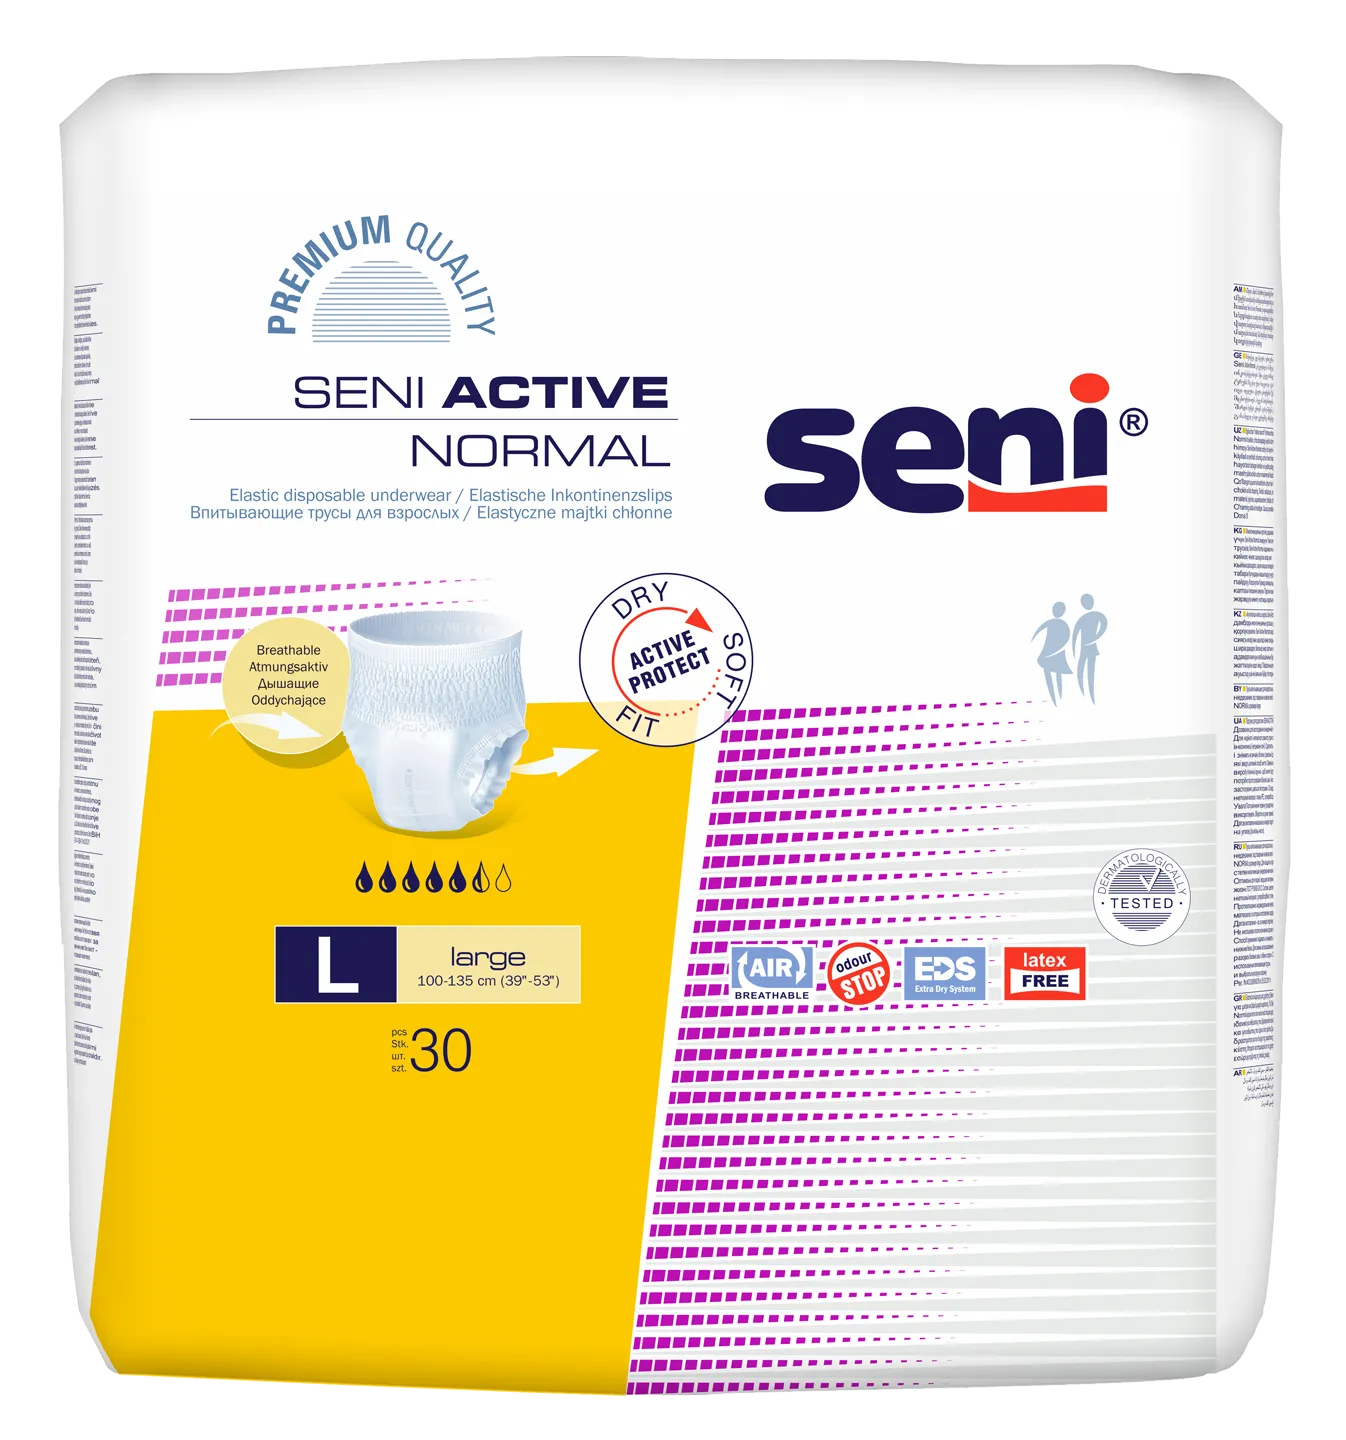 Seni Active Normal. large 100-135 cm, elastyczne majtki chłonne, 30 sztuk